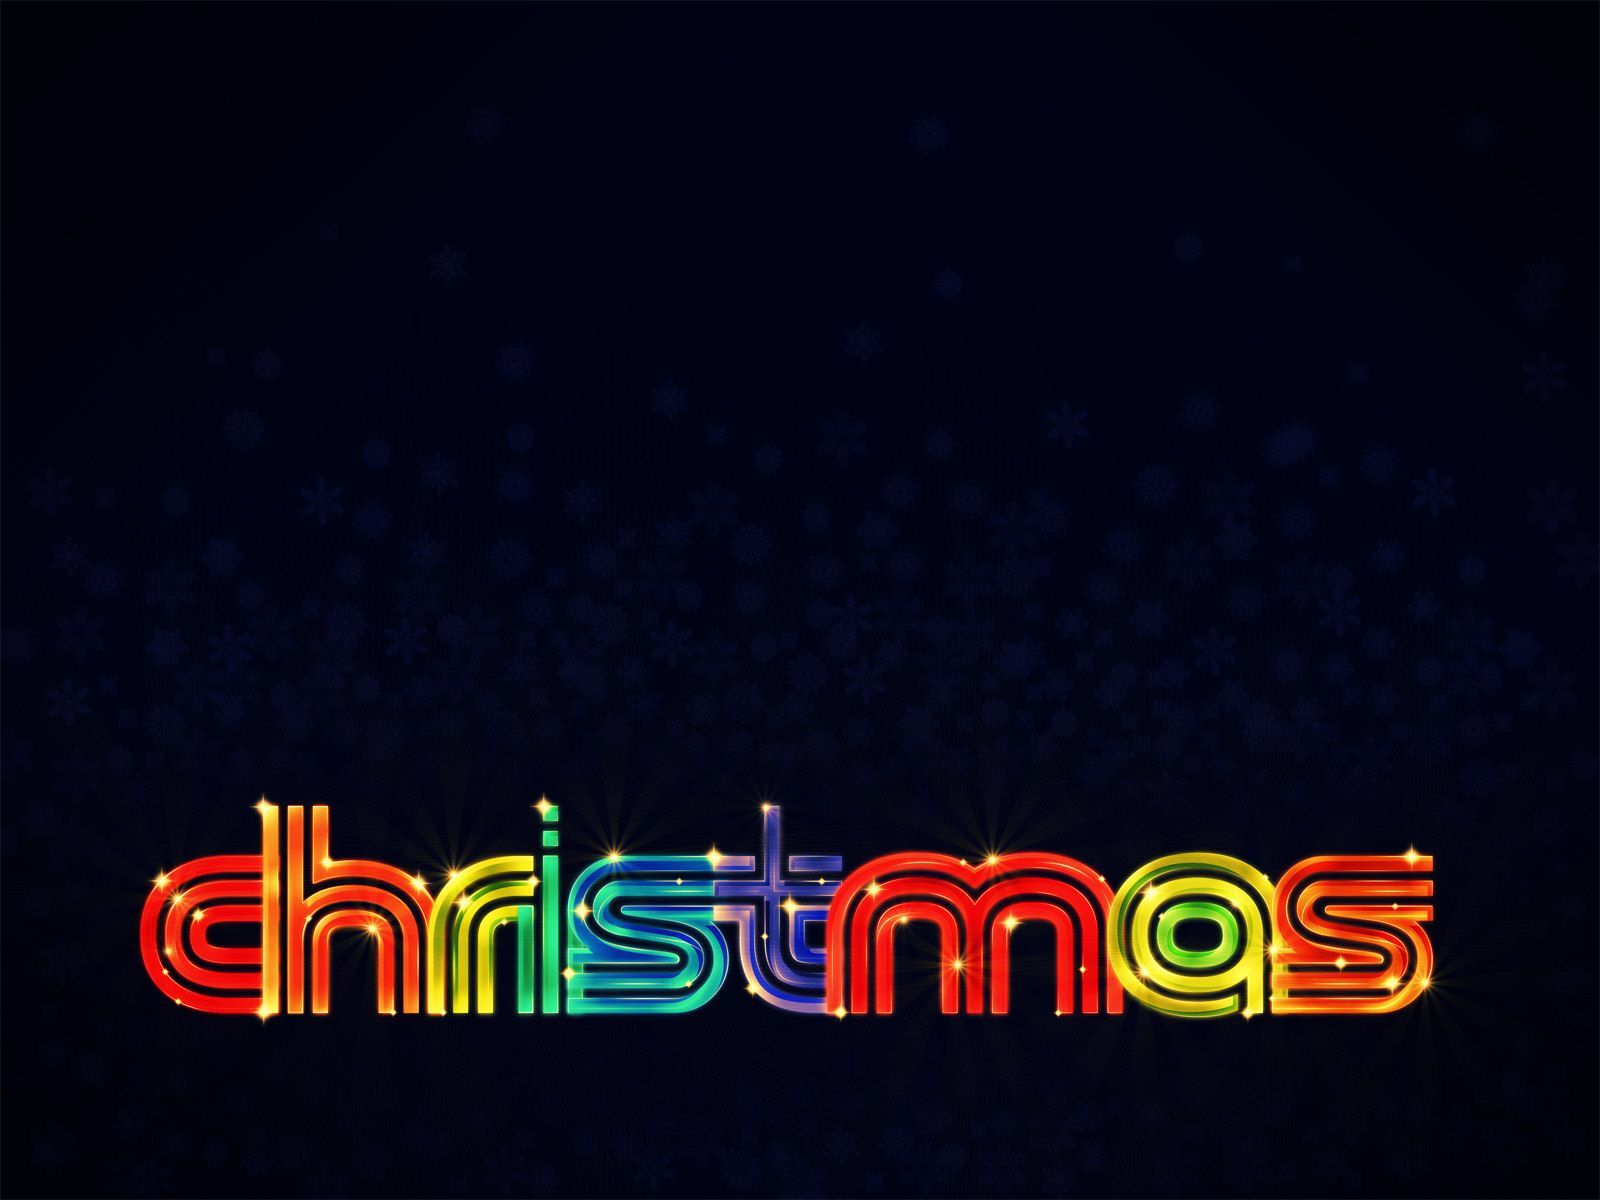 Stylish Merry Christmas Wallpaper and Background For Desktop. Christmas lights wallpaper, Christmas wallpaper, Christmas lights